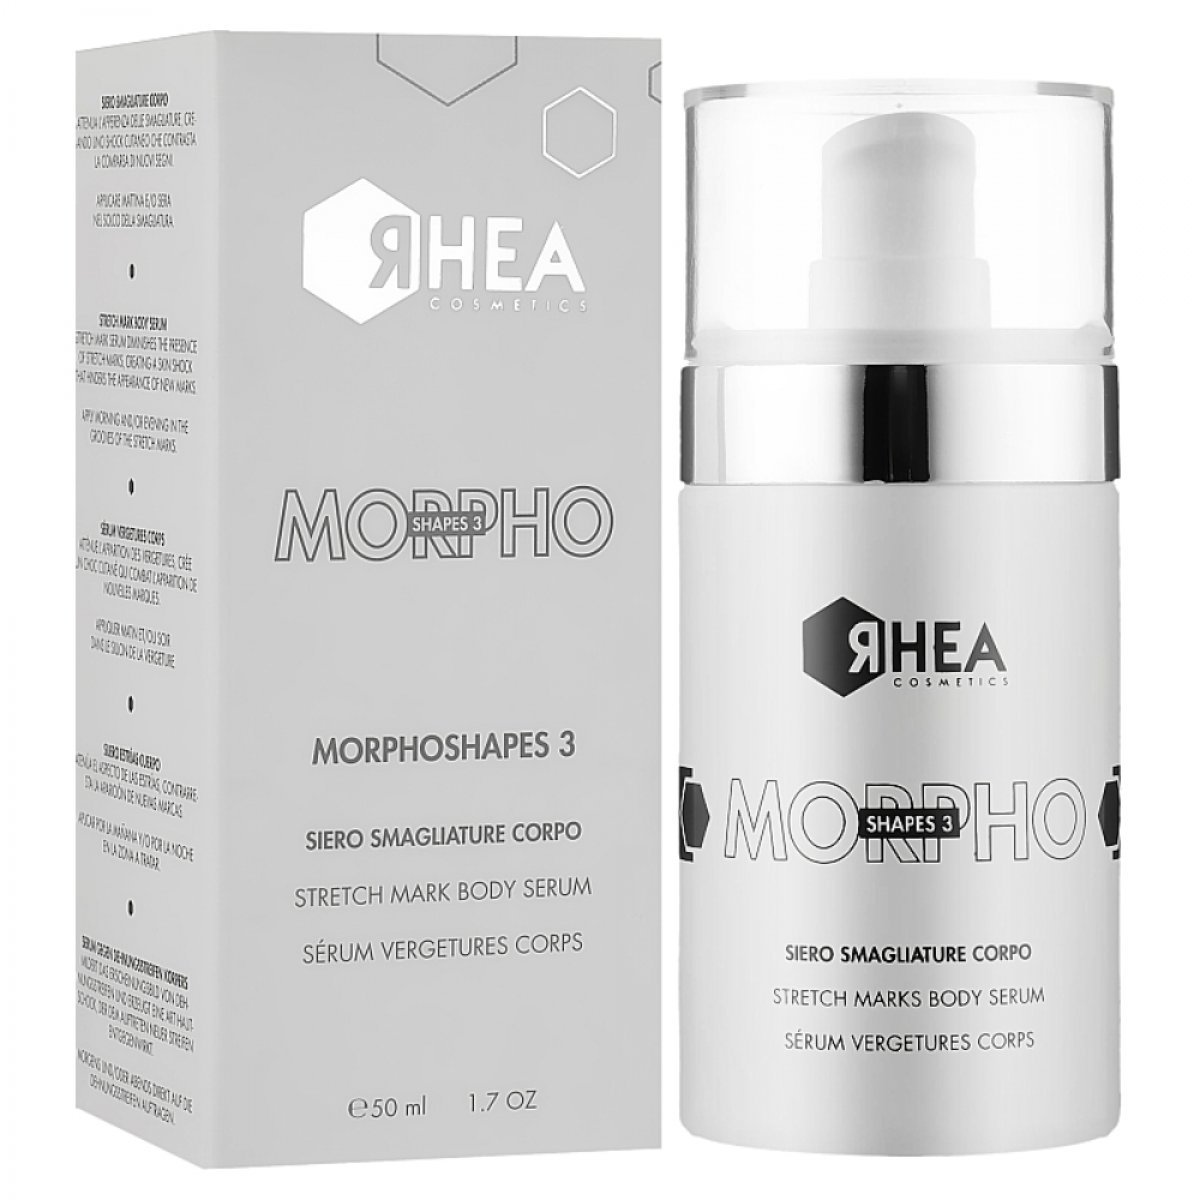 Сыворотка против растяжек Morphoshapes 3 ЯHEA Cosmetics 50 мл — фото №2